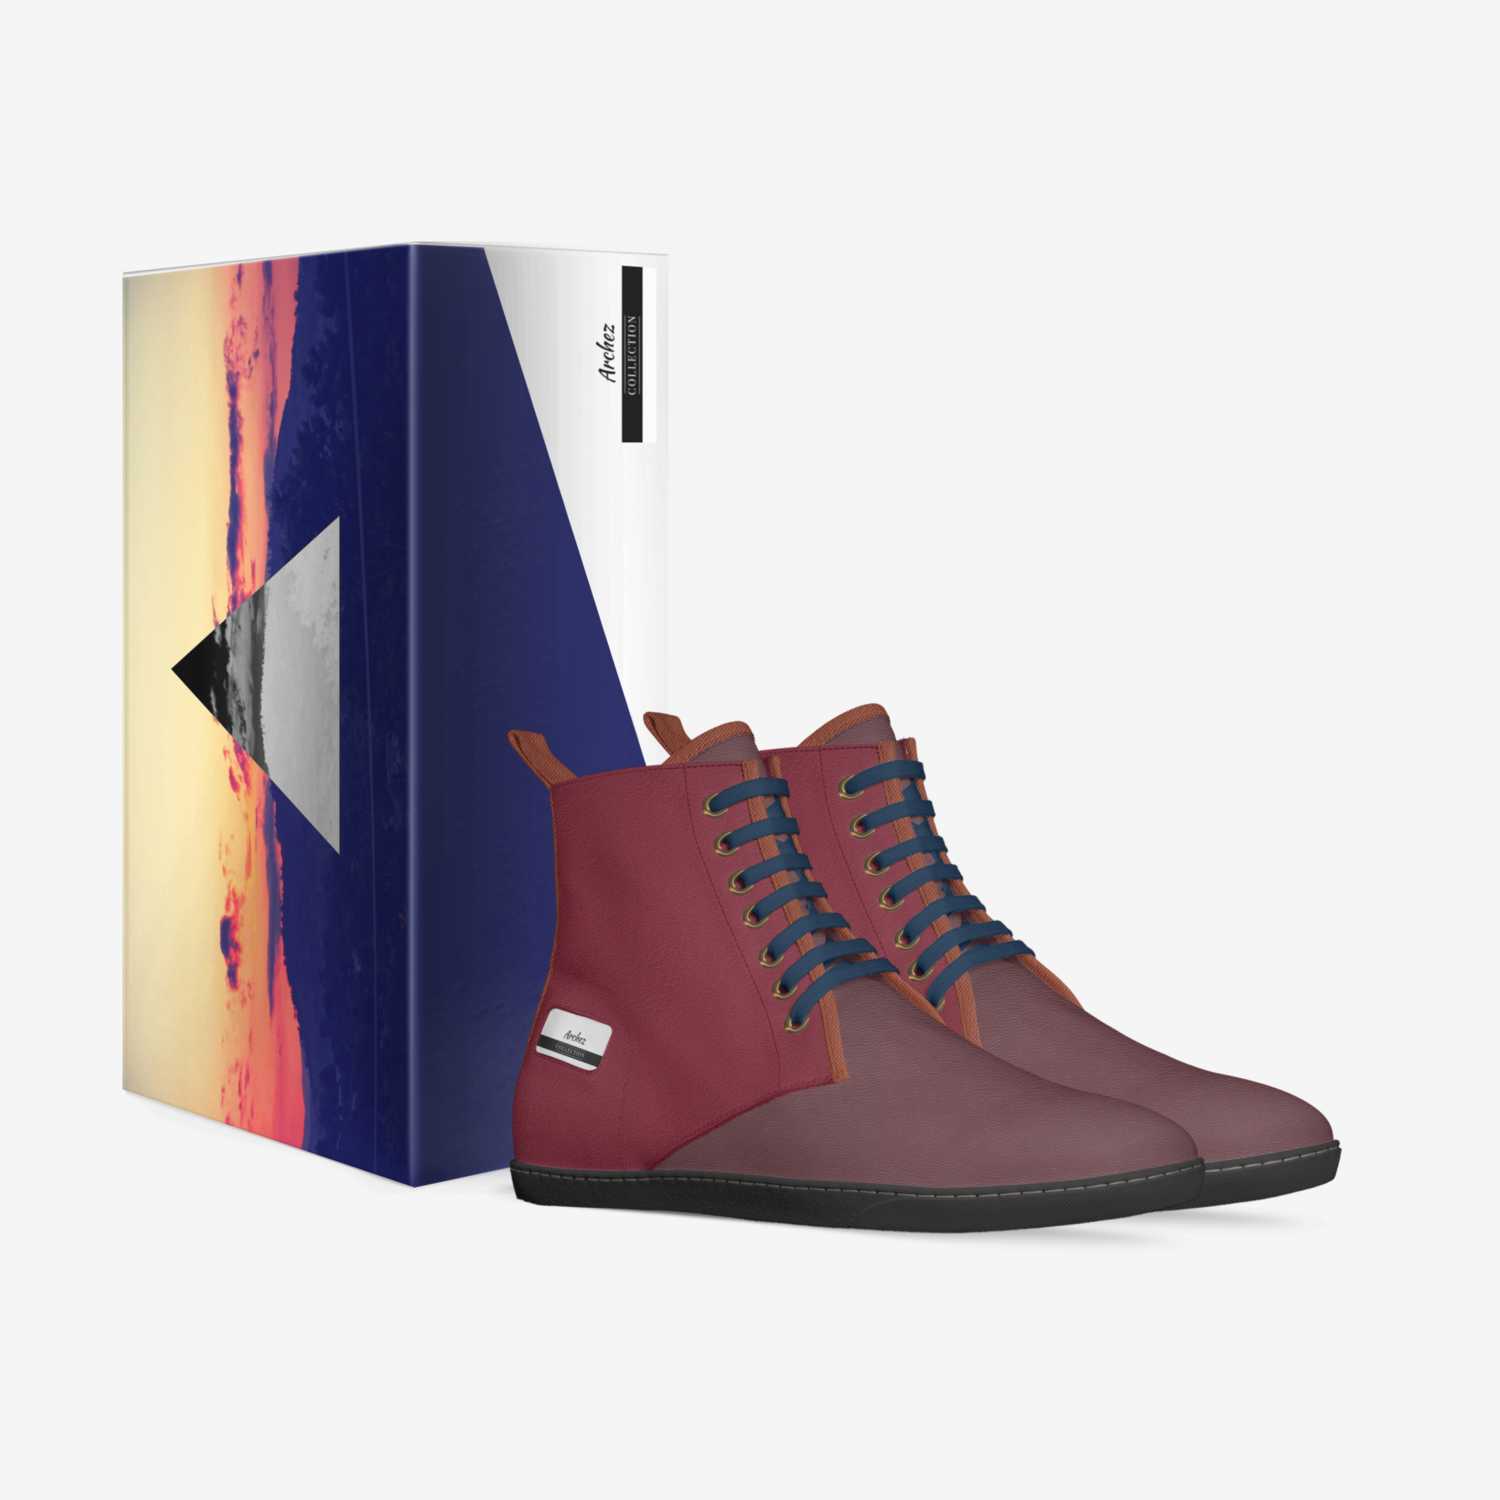 Archez custom made in Italy shoes by Gavin Koch Scott | Box view